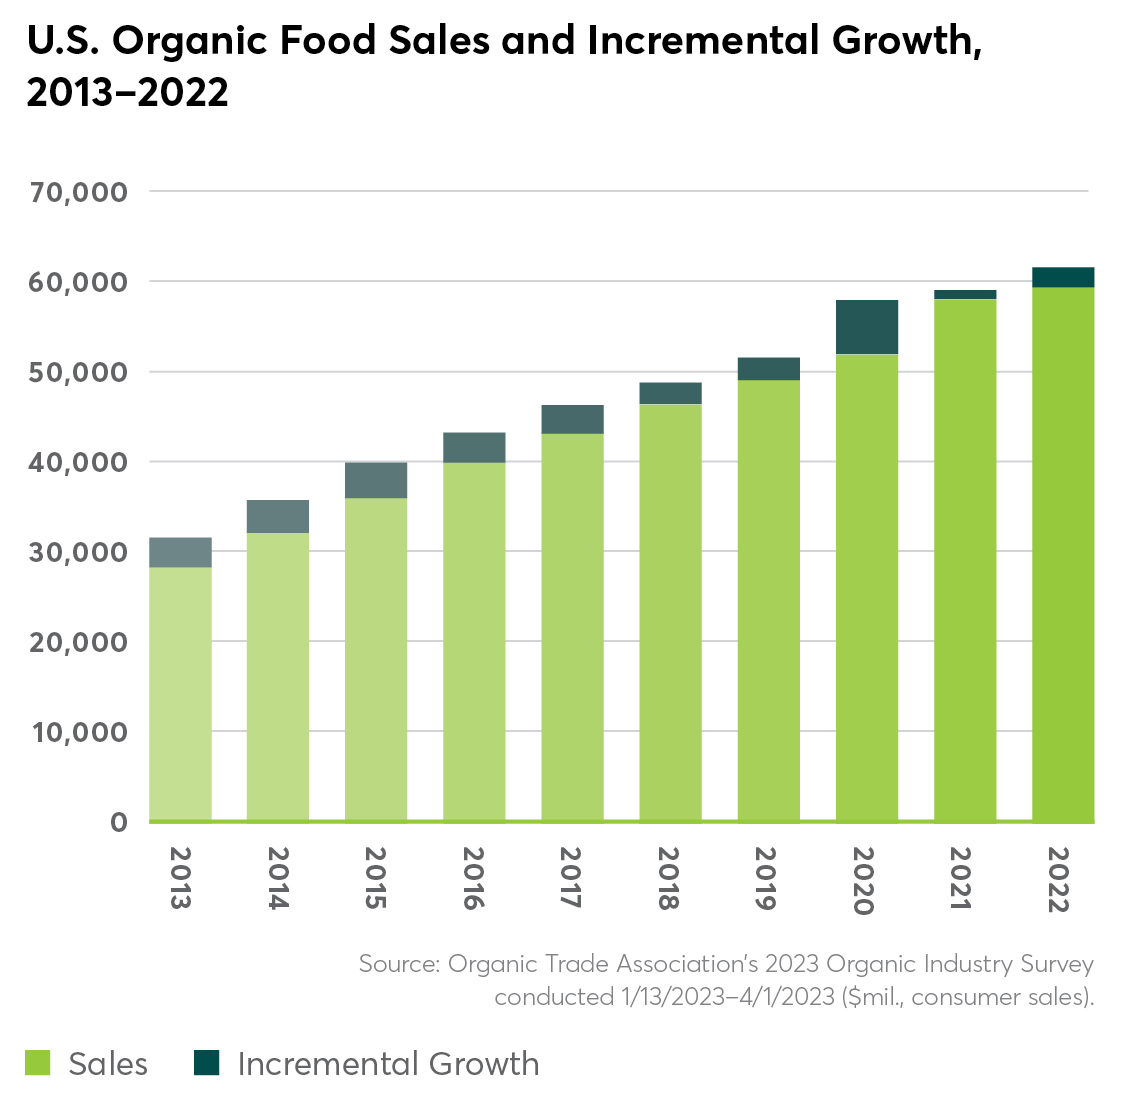 Fruit and veg drive US organic food sales through $60bn barrier